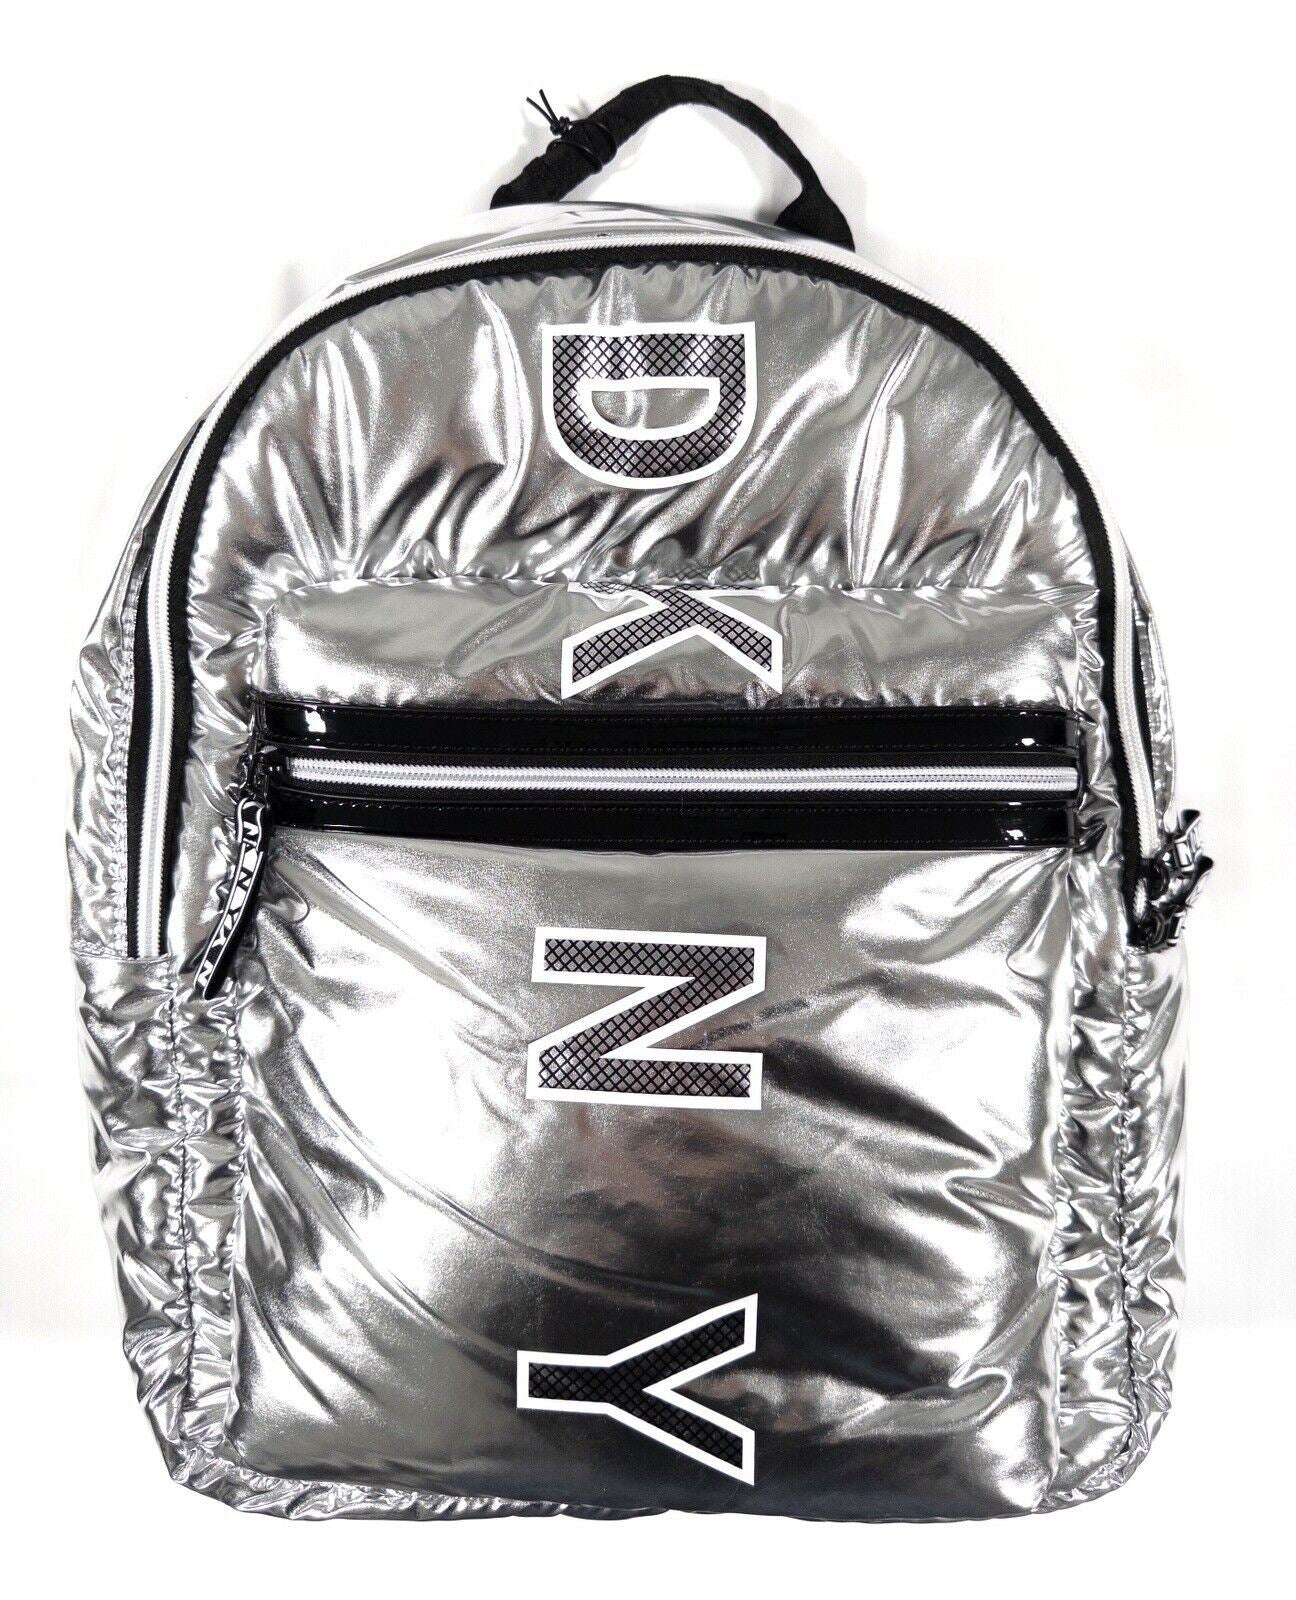 DKNY Silver Metallic Backpack Rucksack Bag Large